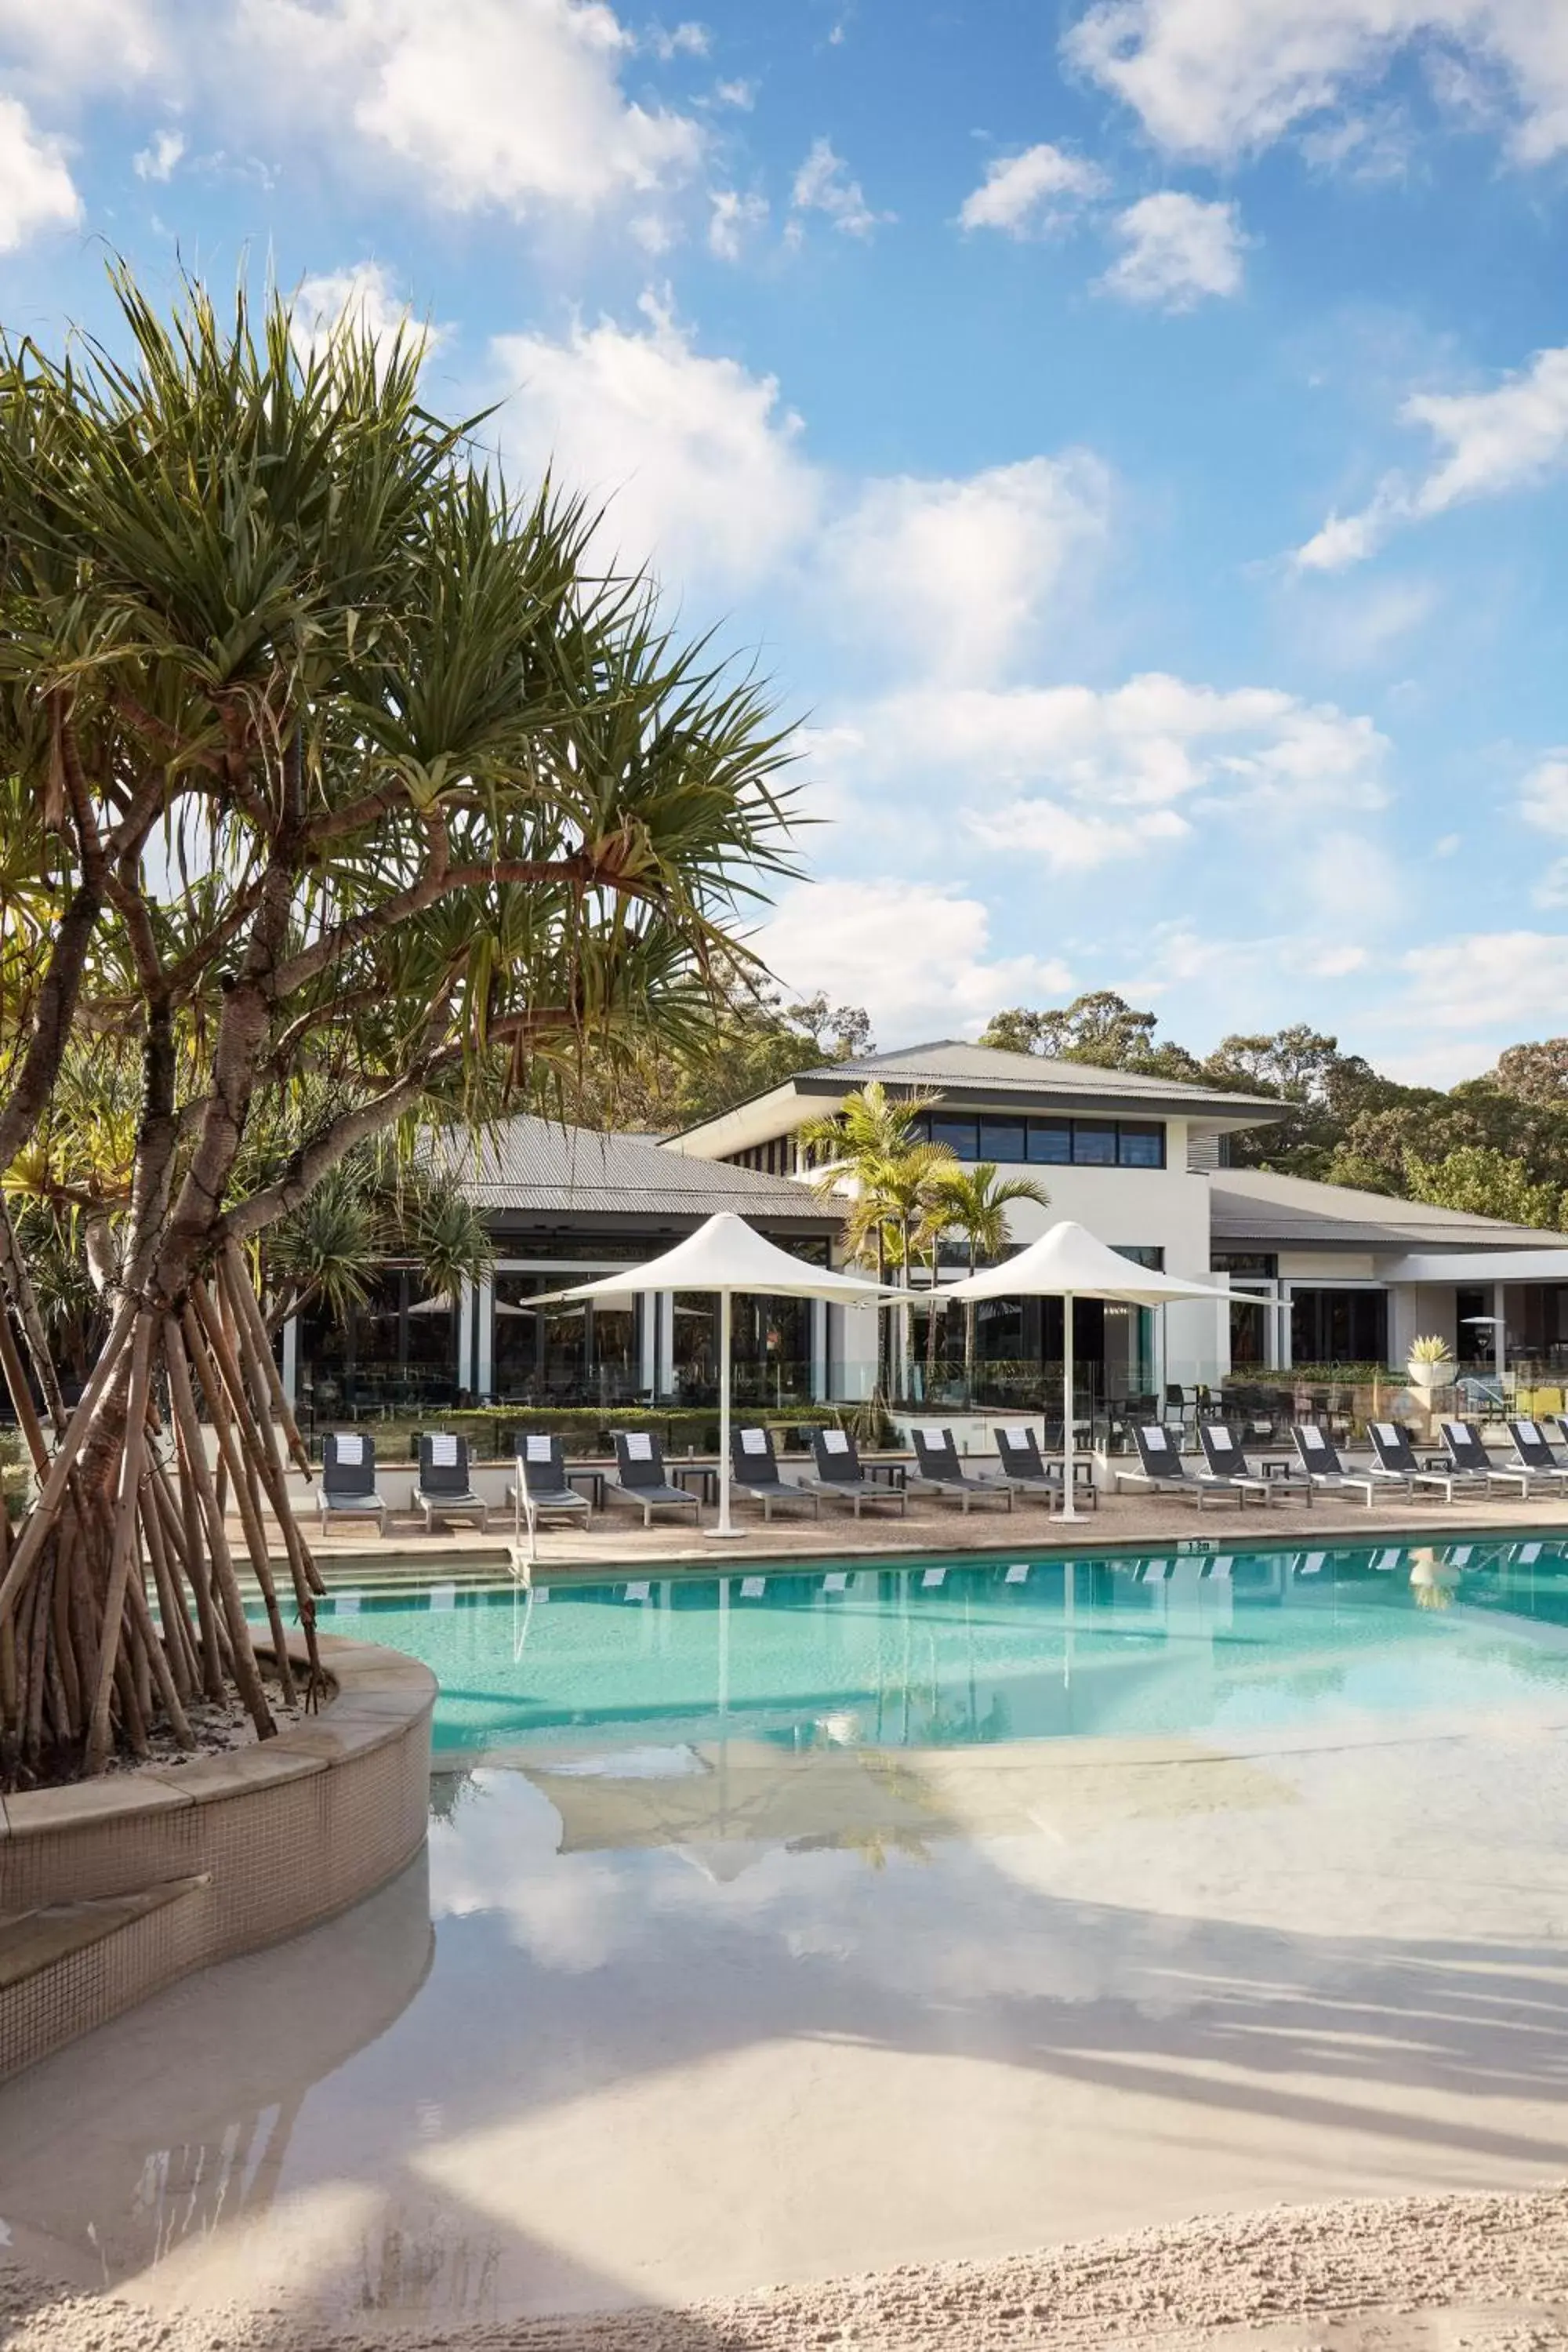 Swimming pool in RACV Noosa Resort